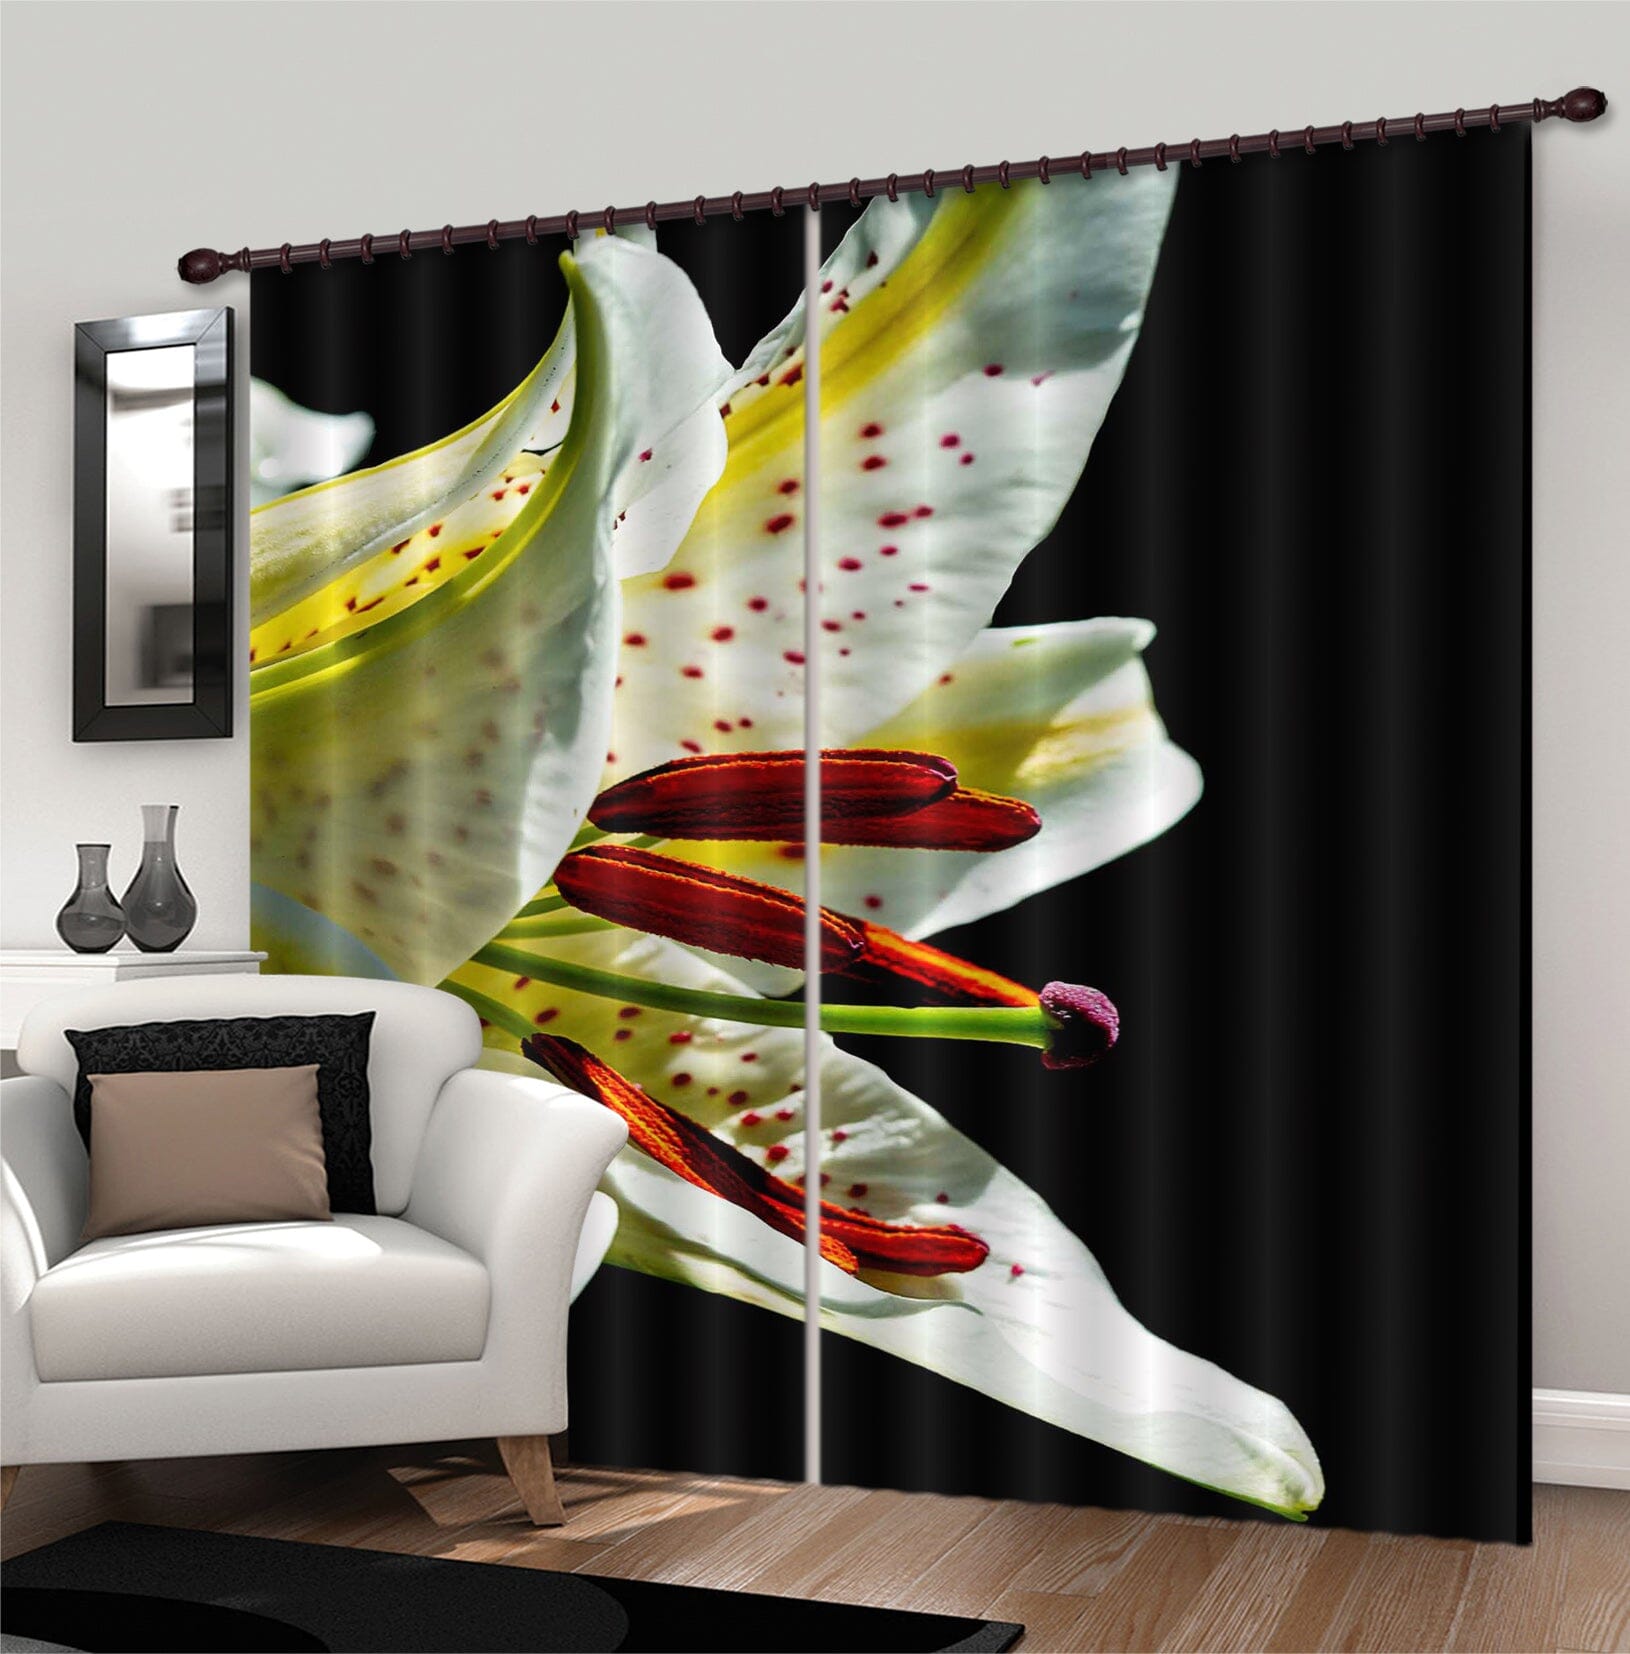 3D Lily 076 Kathy Barefield Curtain Curtains Drapes Curtains AJ Creativity Home 